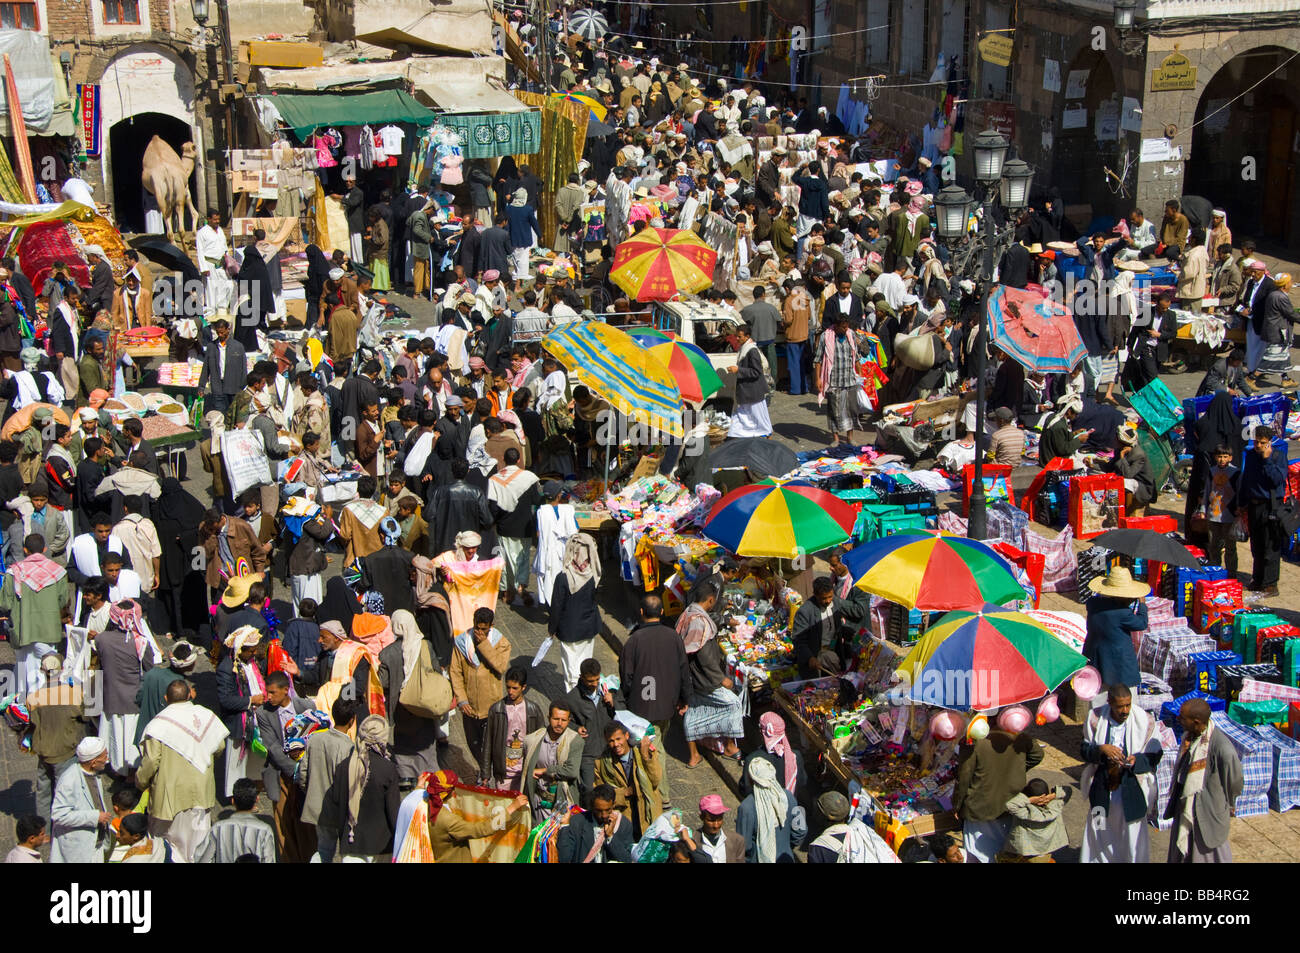 Bab Al Yemen market in the old town district of Sana'a Yemen Stock Photo